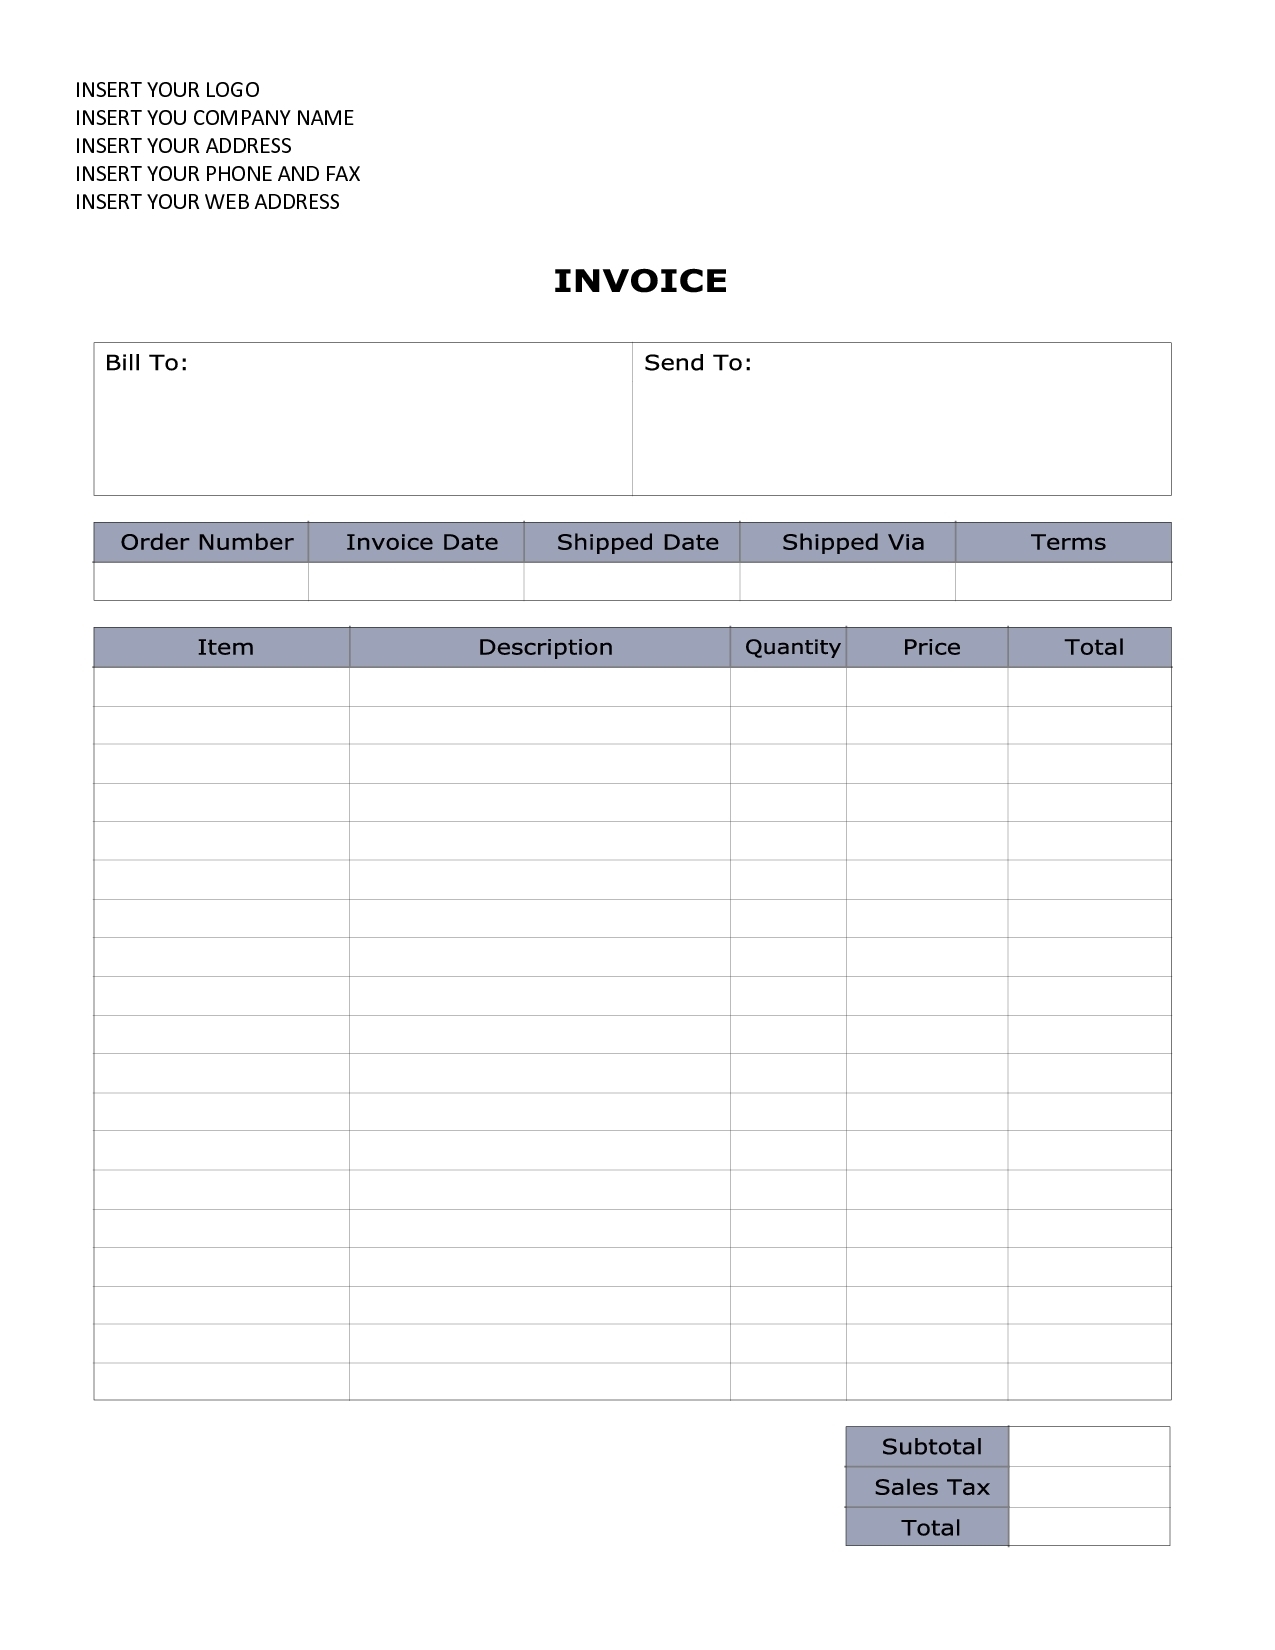 sample invoice template word doc design invoice template invoice word doc